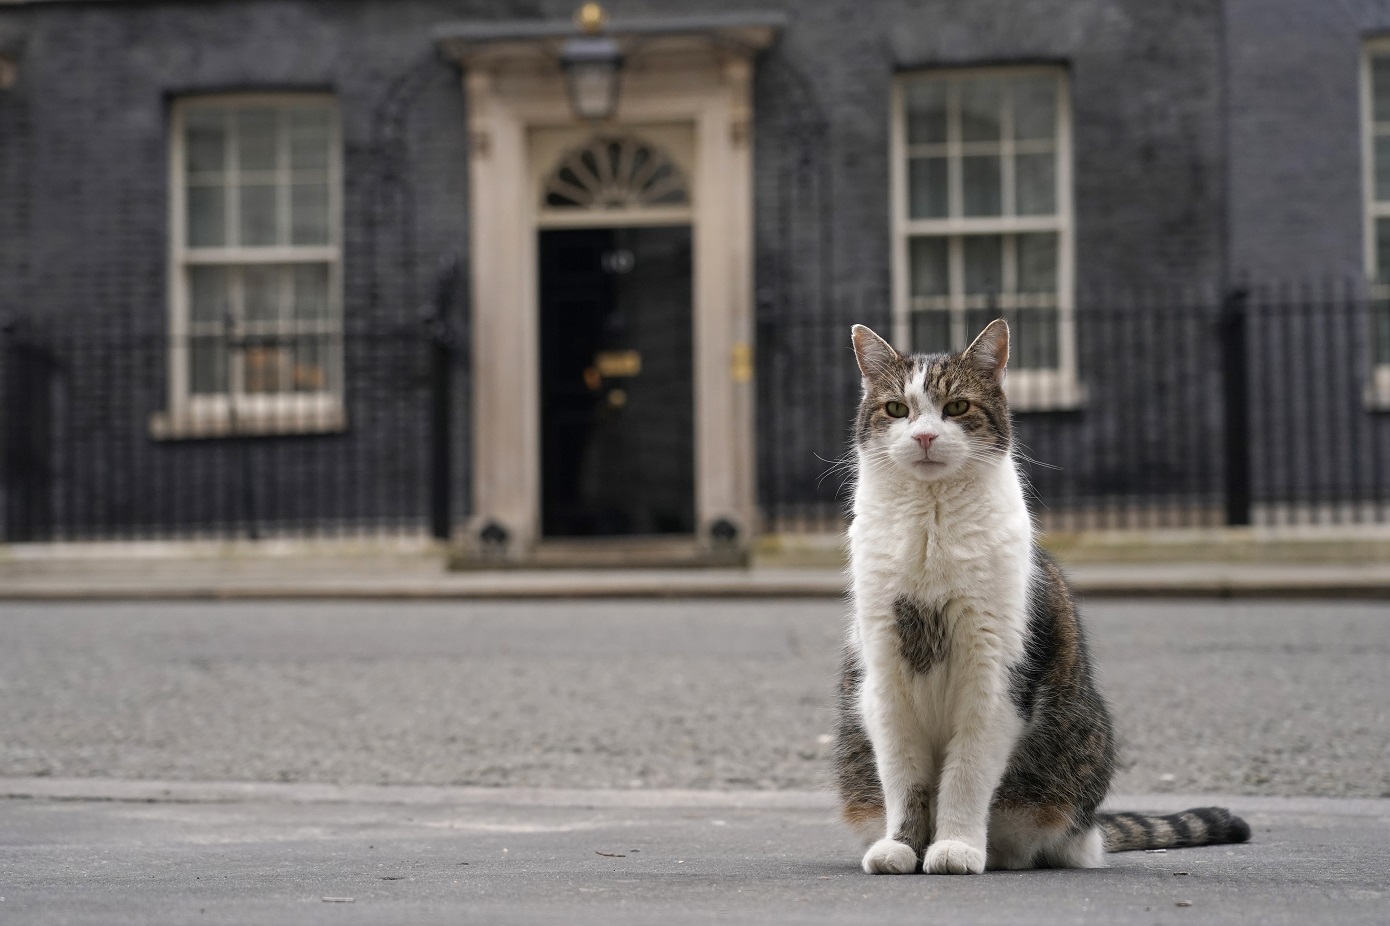 O γάτος της Ντάουνινγκ Στριτ, ένας πυλώνας σταθερότητας στη βρετανική πολιτική σκηνή